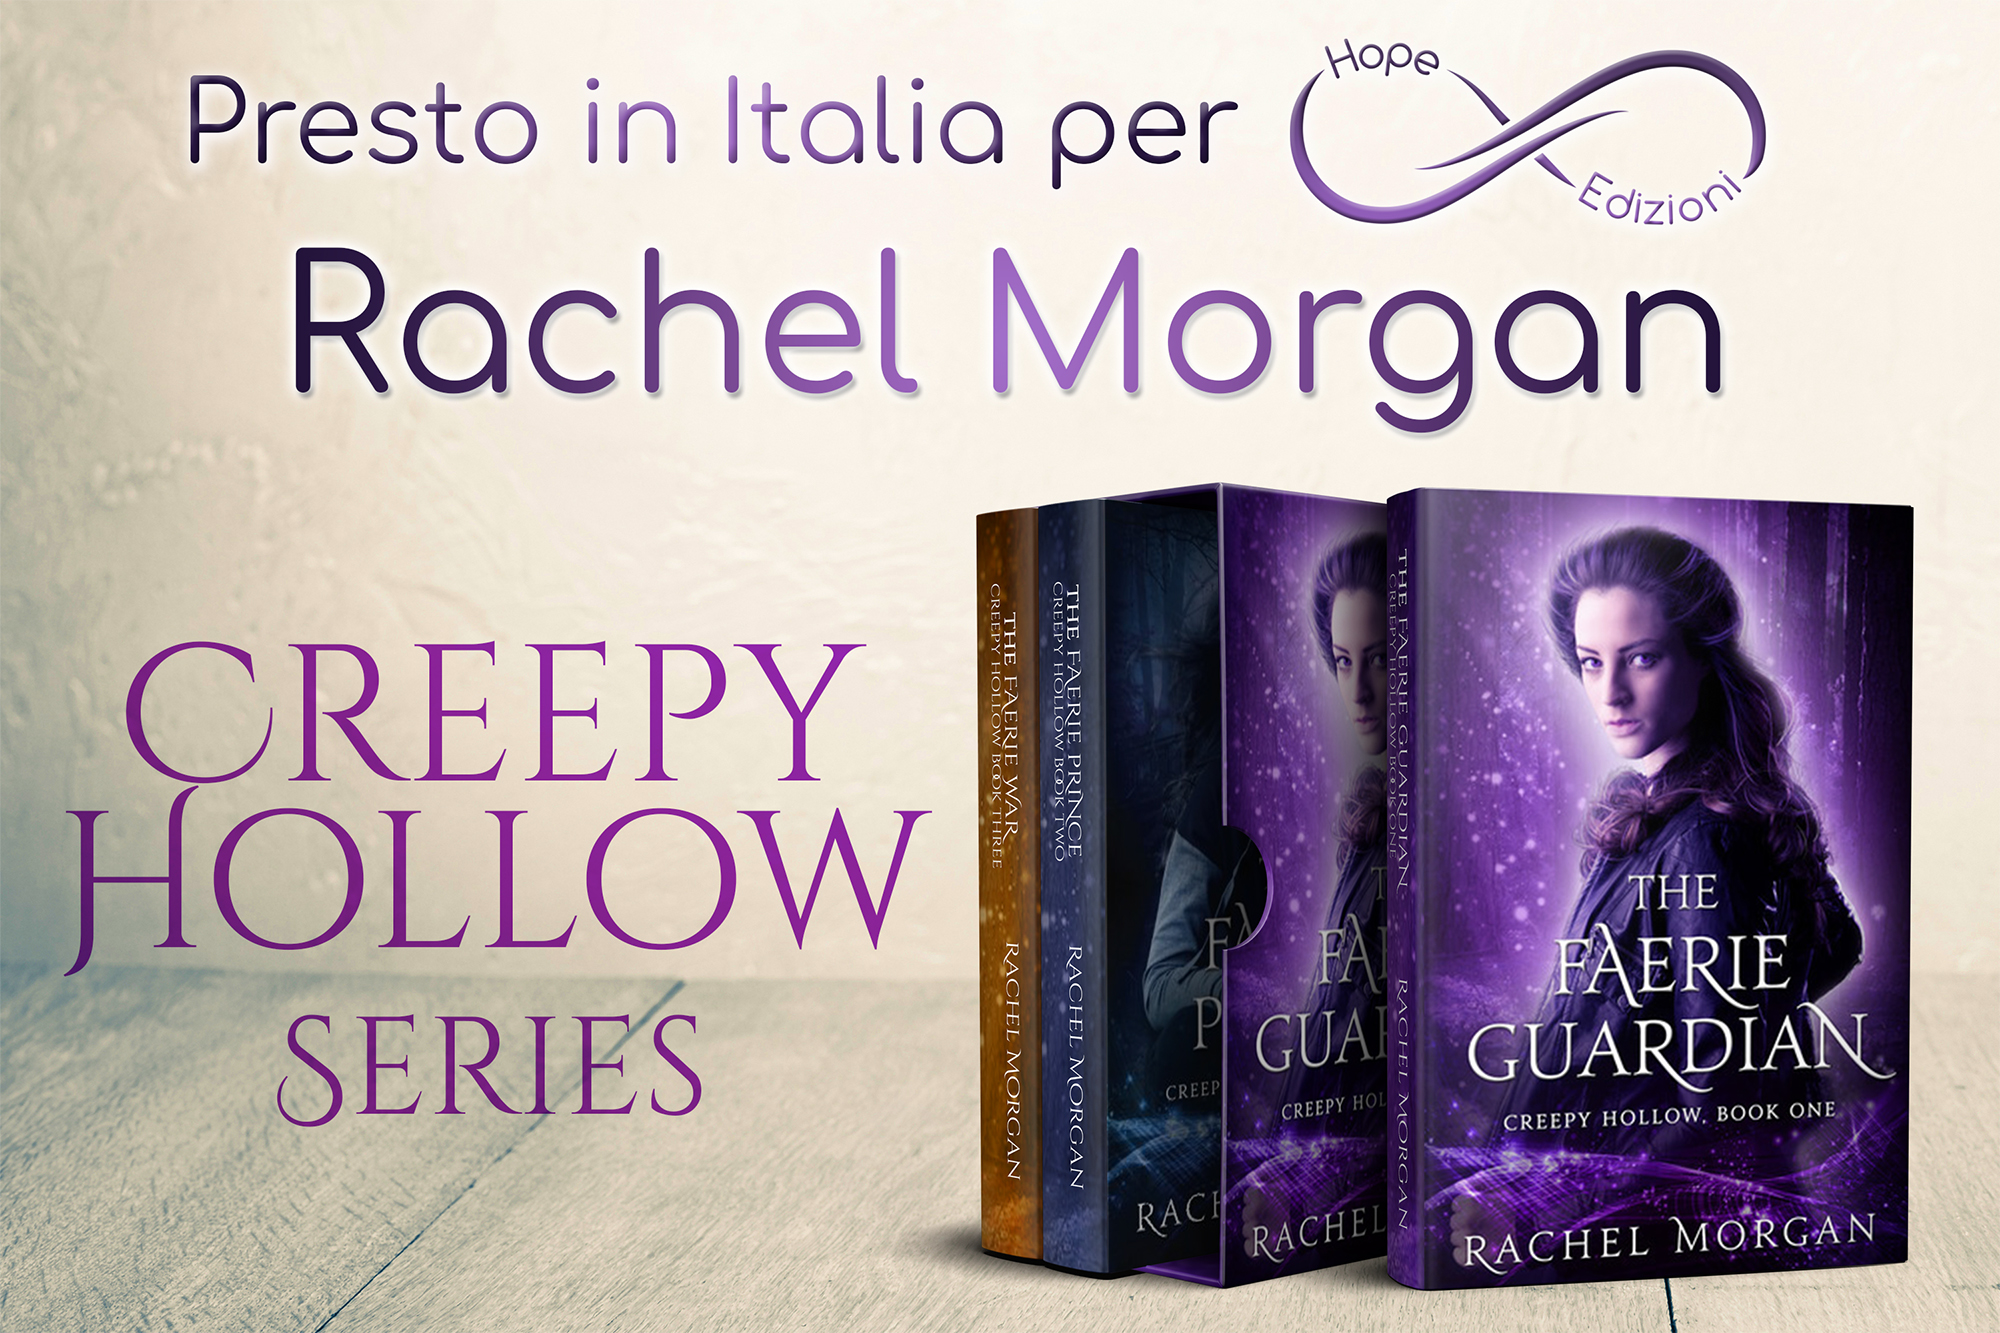 Presto in Italia… Rachel Morgan!